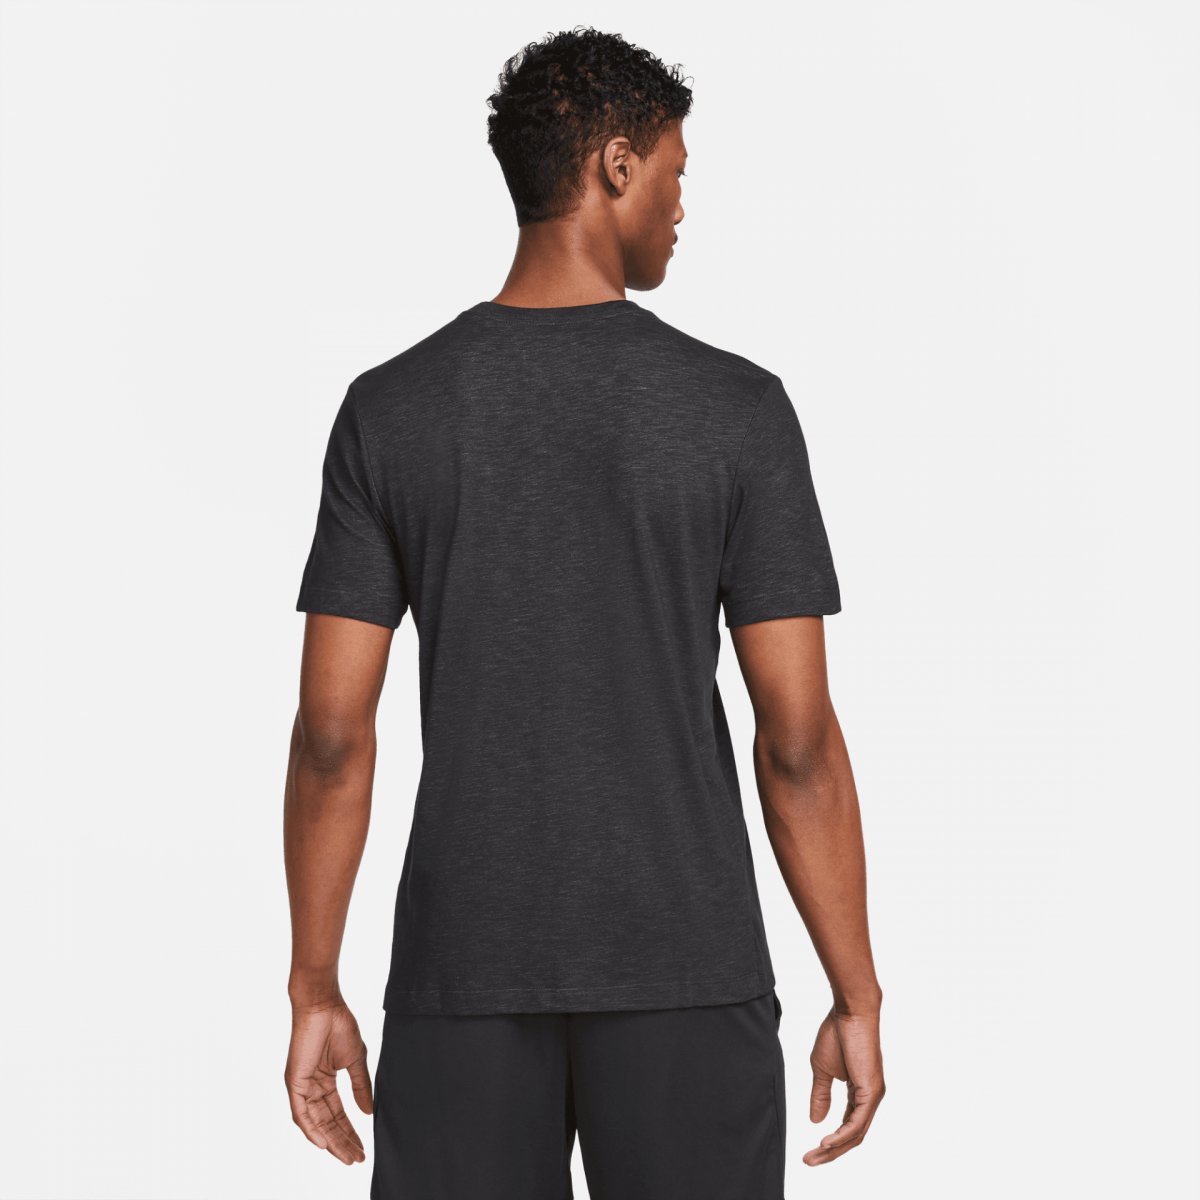 Nike Dri-FIT Black Men's training tee - Tshirts - Clothes - Men - Forpro